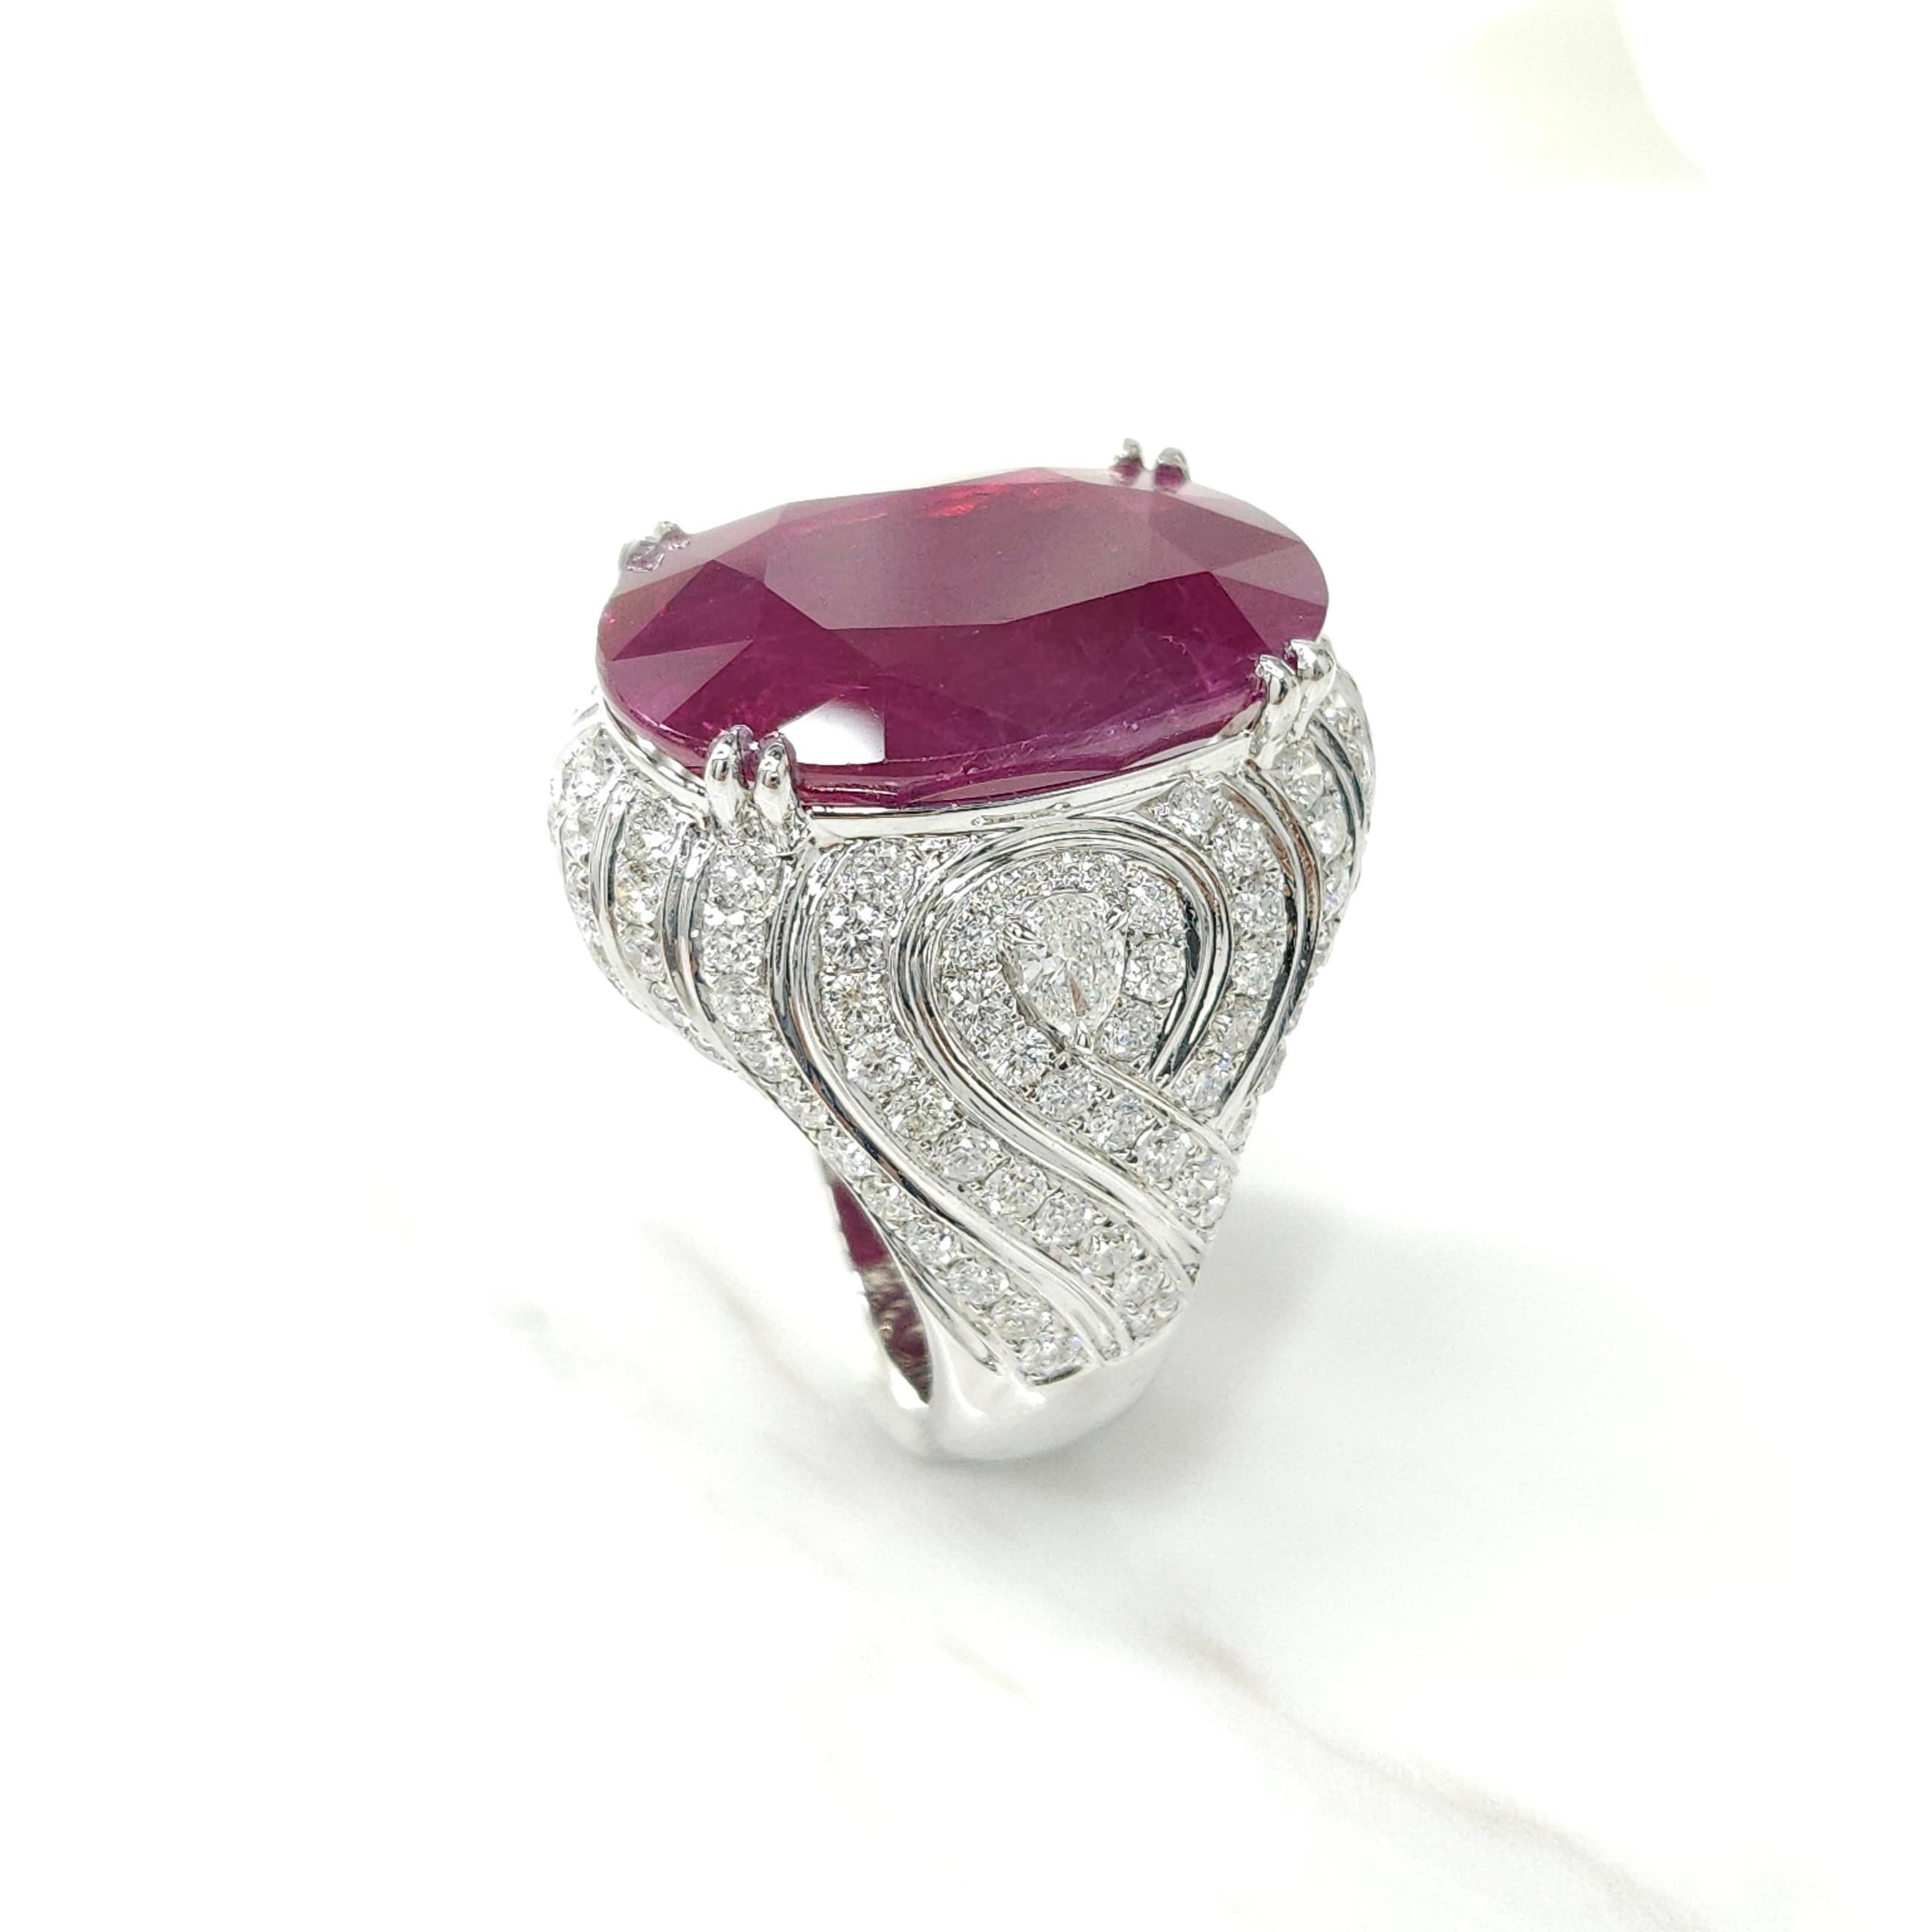 IGI Certified Rare 25.49 Carat Burma Ruby & Diamond Ring in 18K White Gold For Sale 11